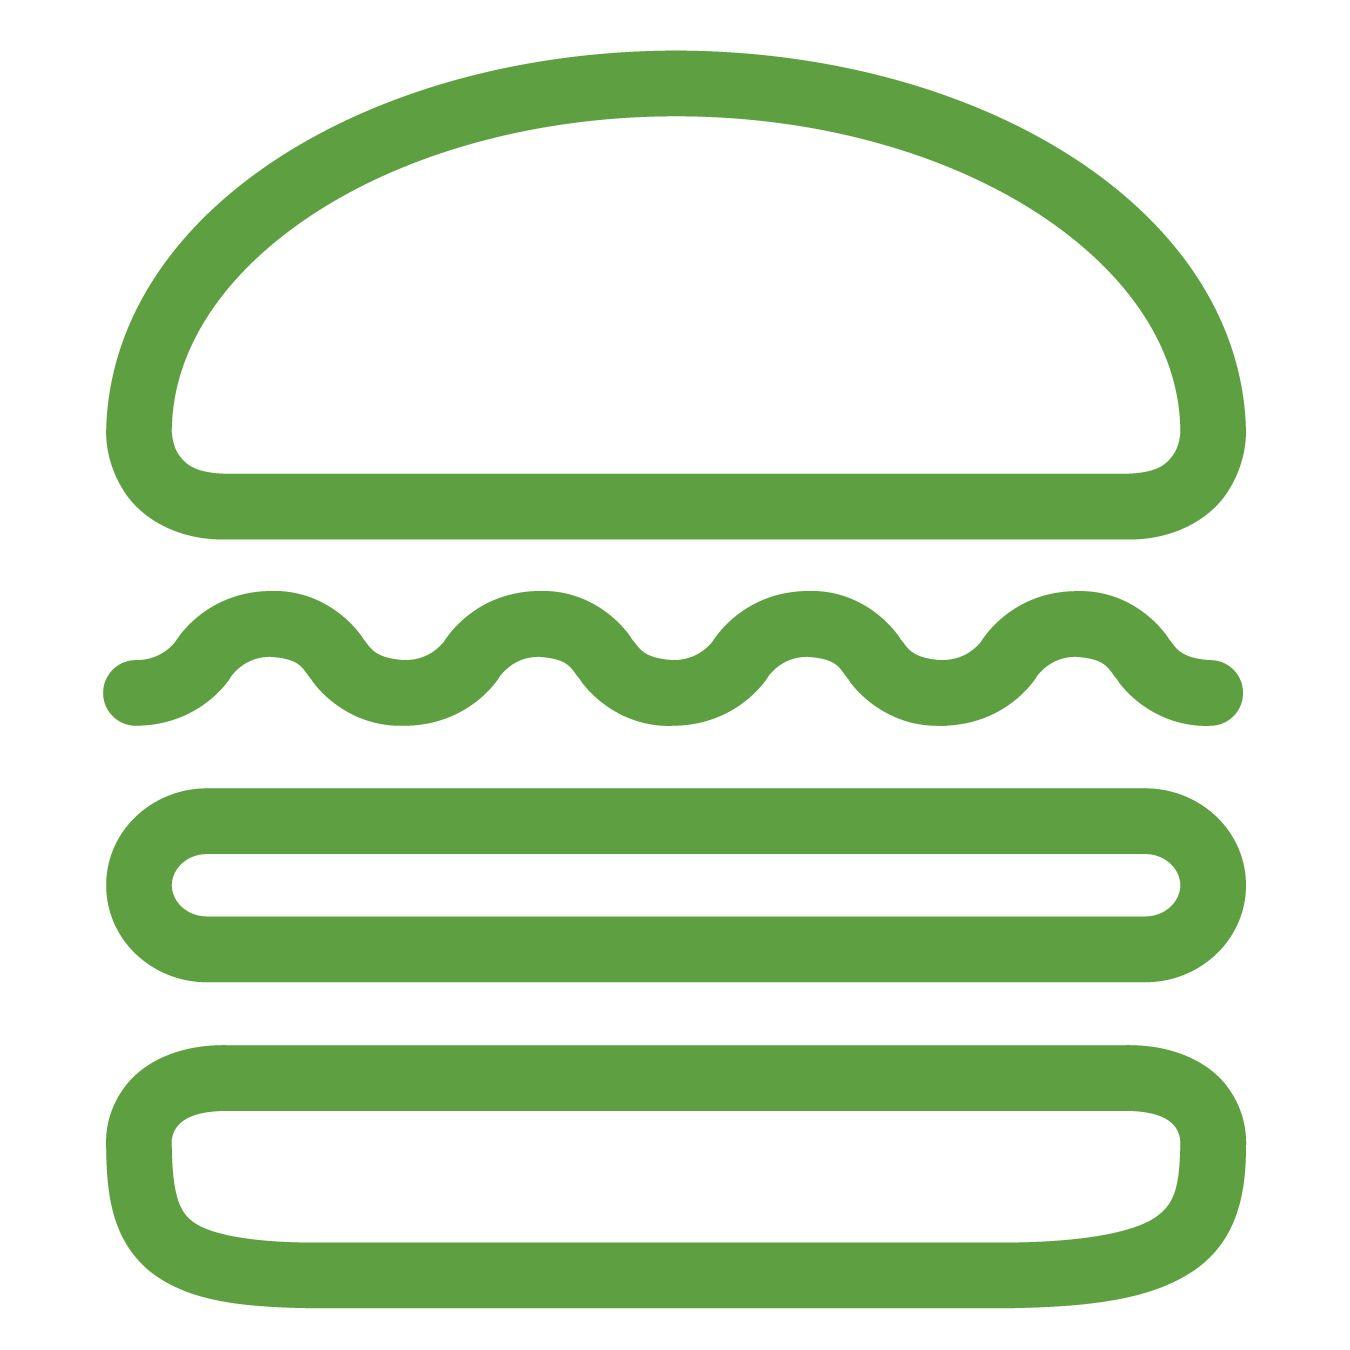 Greenburger Logo - EDGAR Filing Documents For 0001620533 15 000038